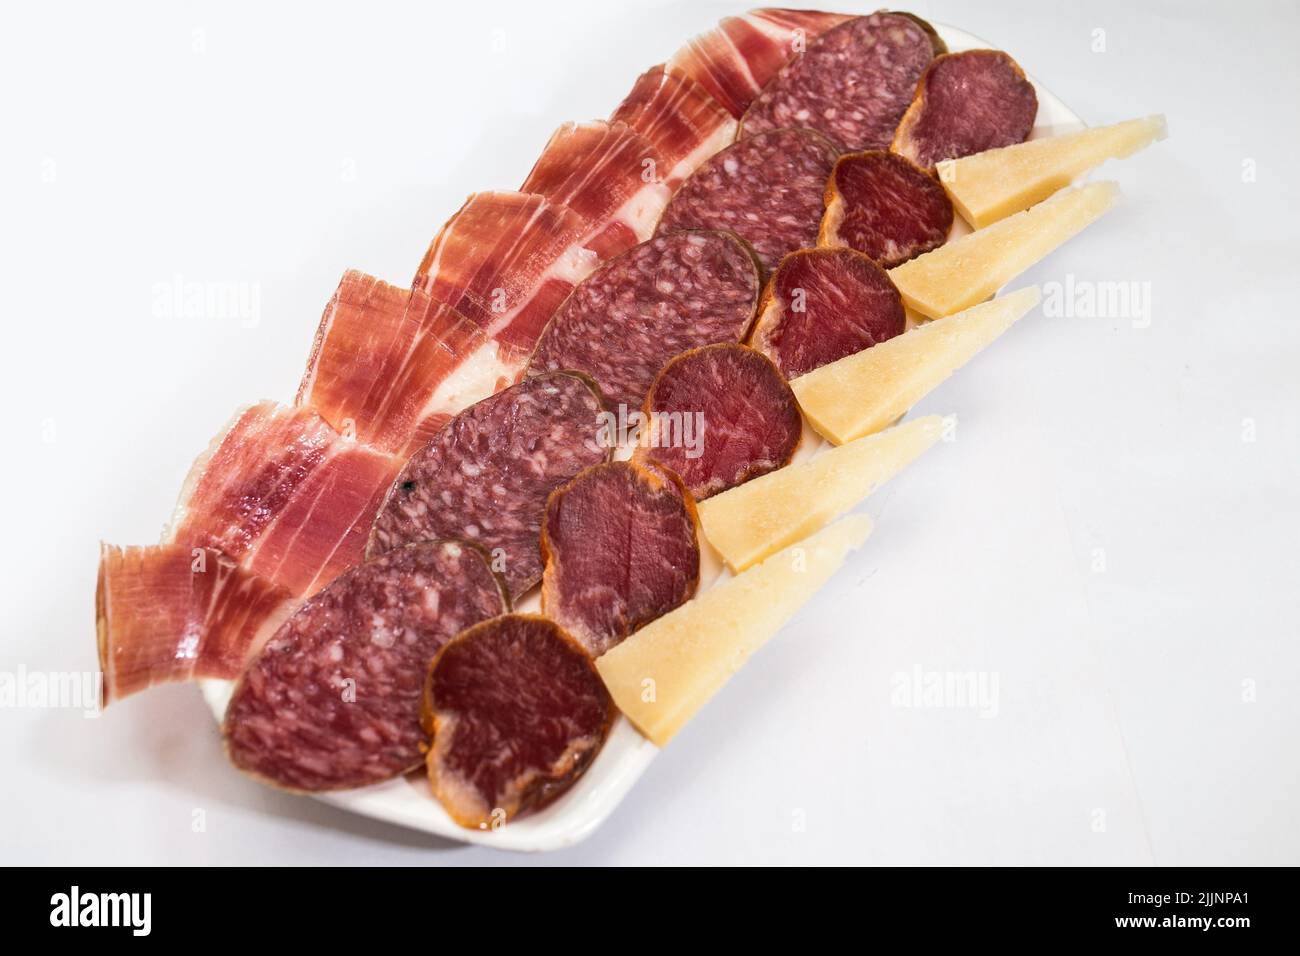 A closeup shot of cut meats on a plate Stock Photo